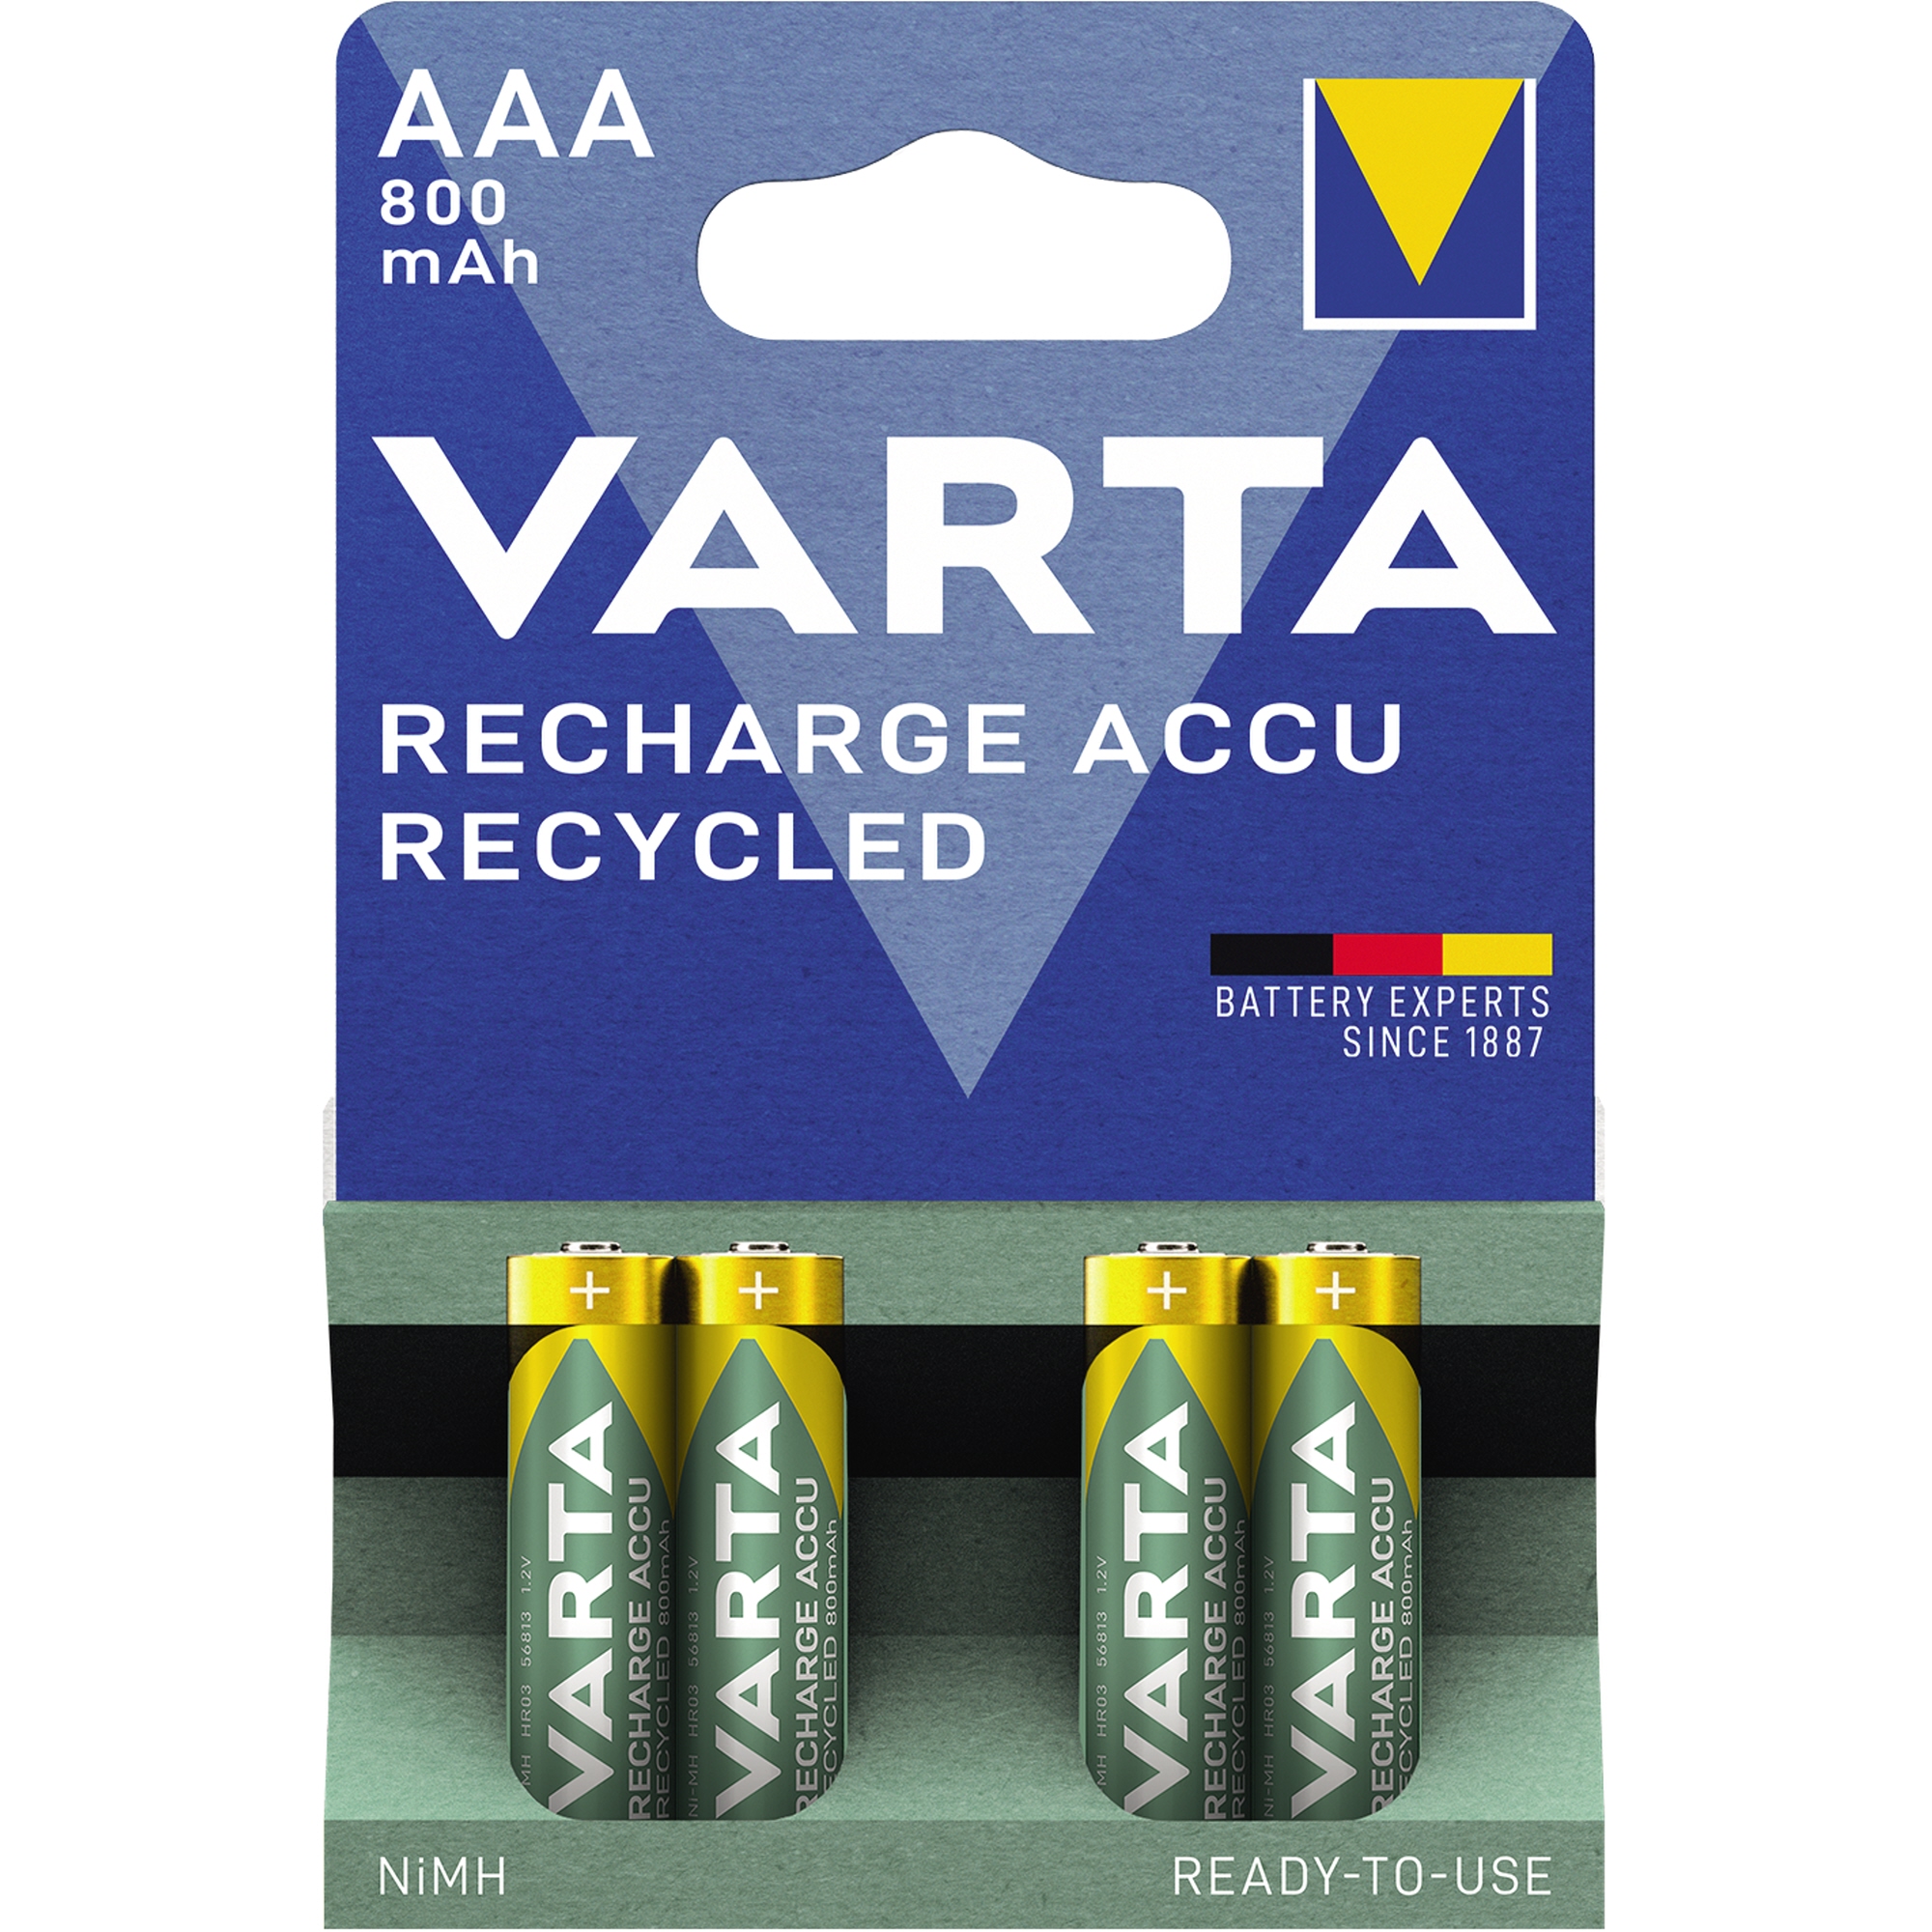 Varta Akku Recycled AAA NIMH 800mAh 4er Pack